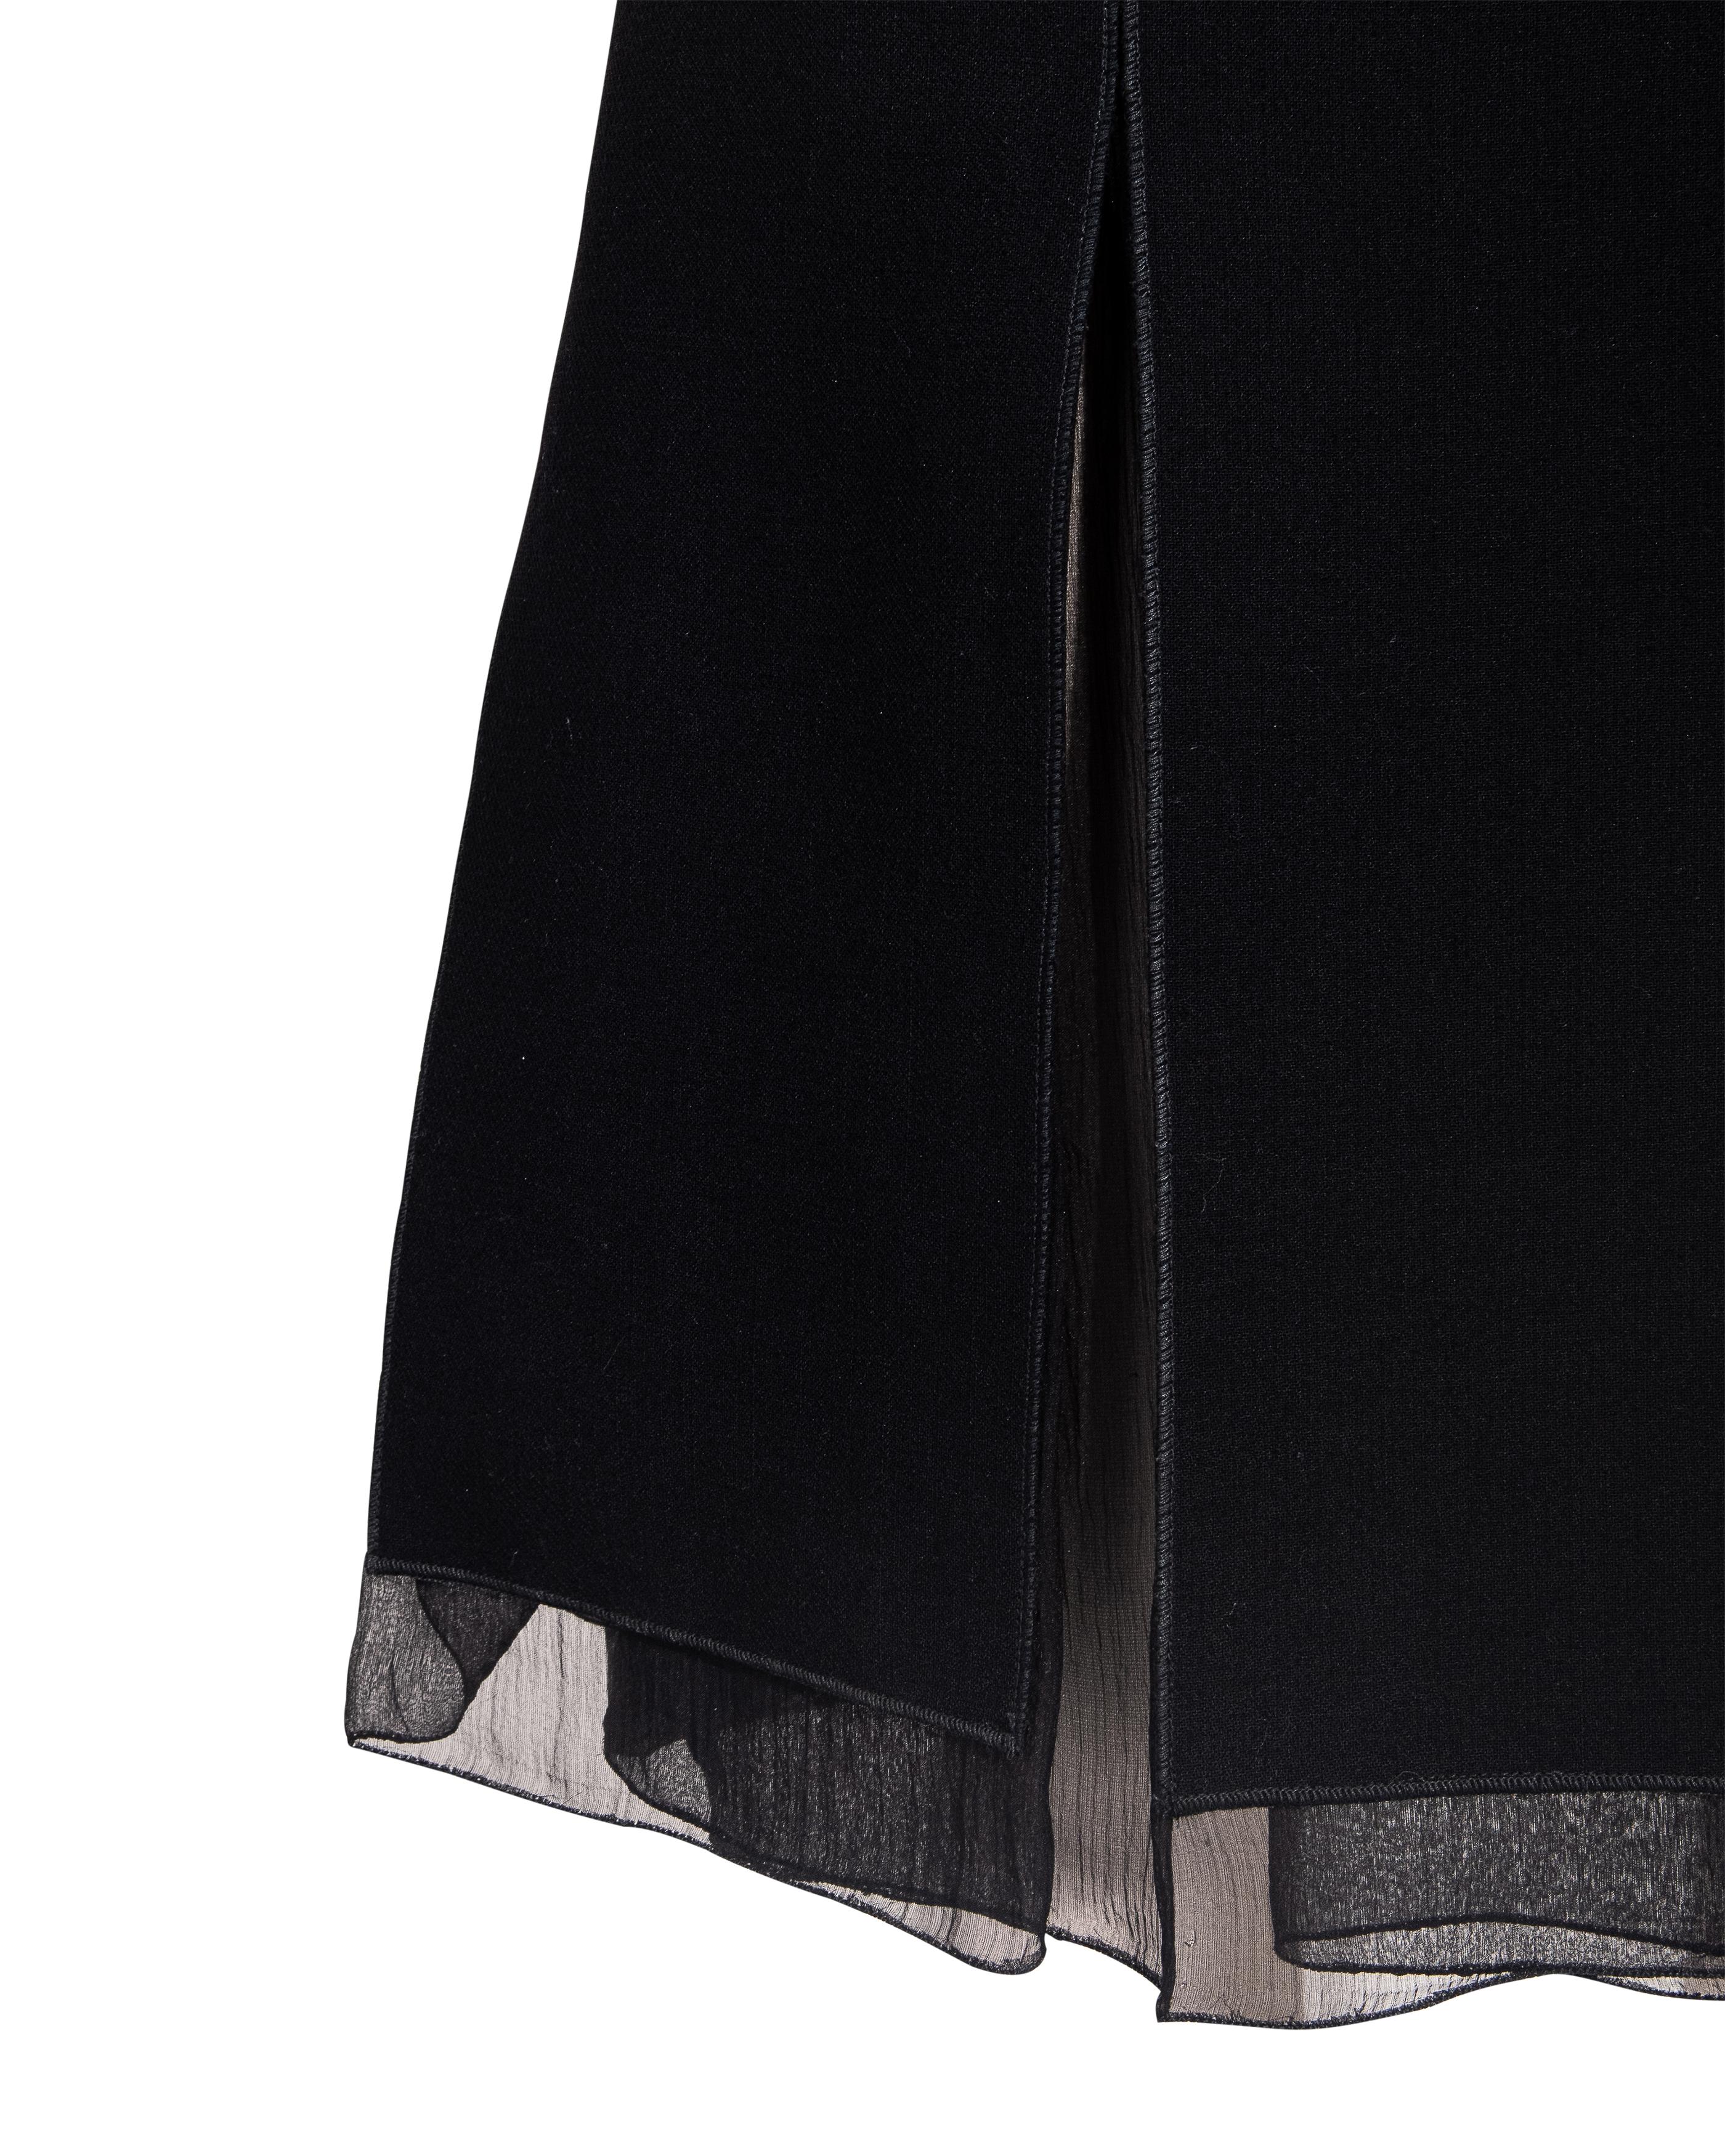 A/W 2001 Prada Black Dress with Semi-Sheer Silk Chiffon Paneling 3